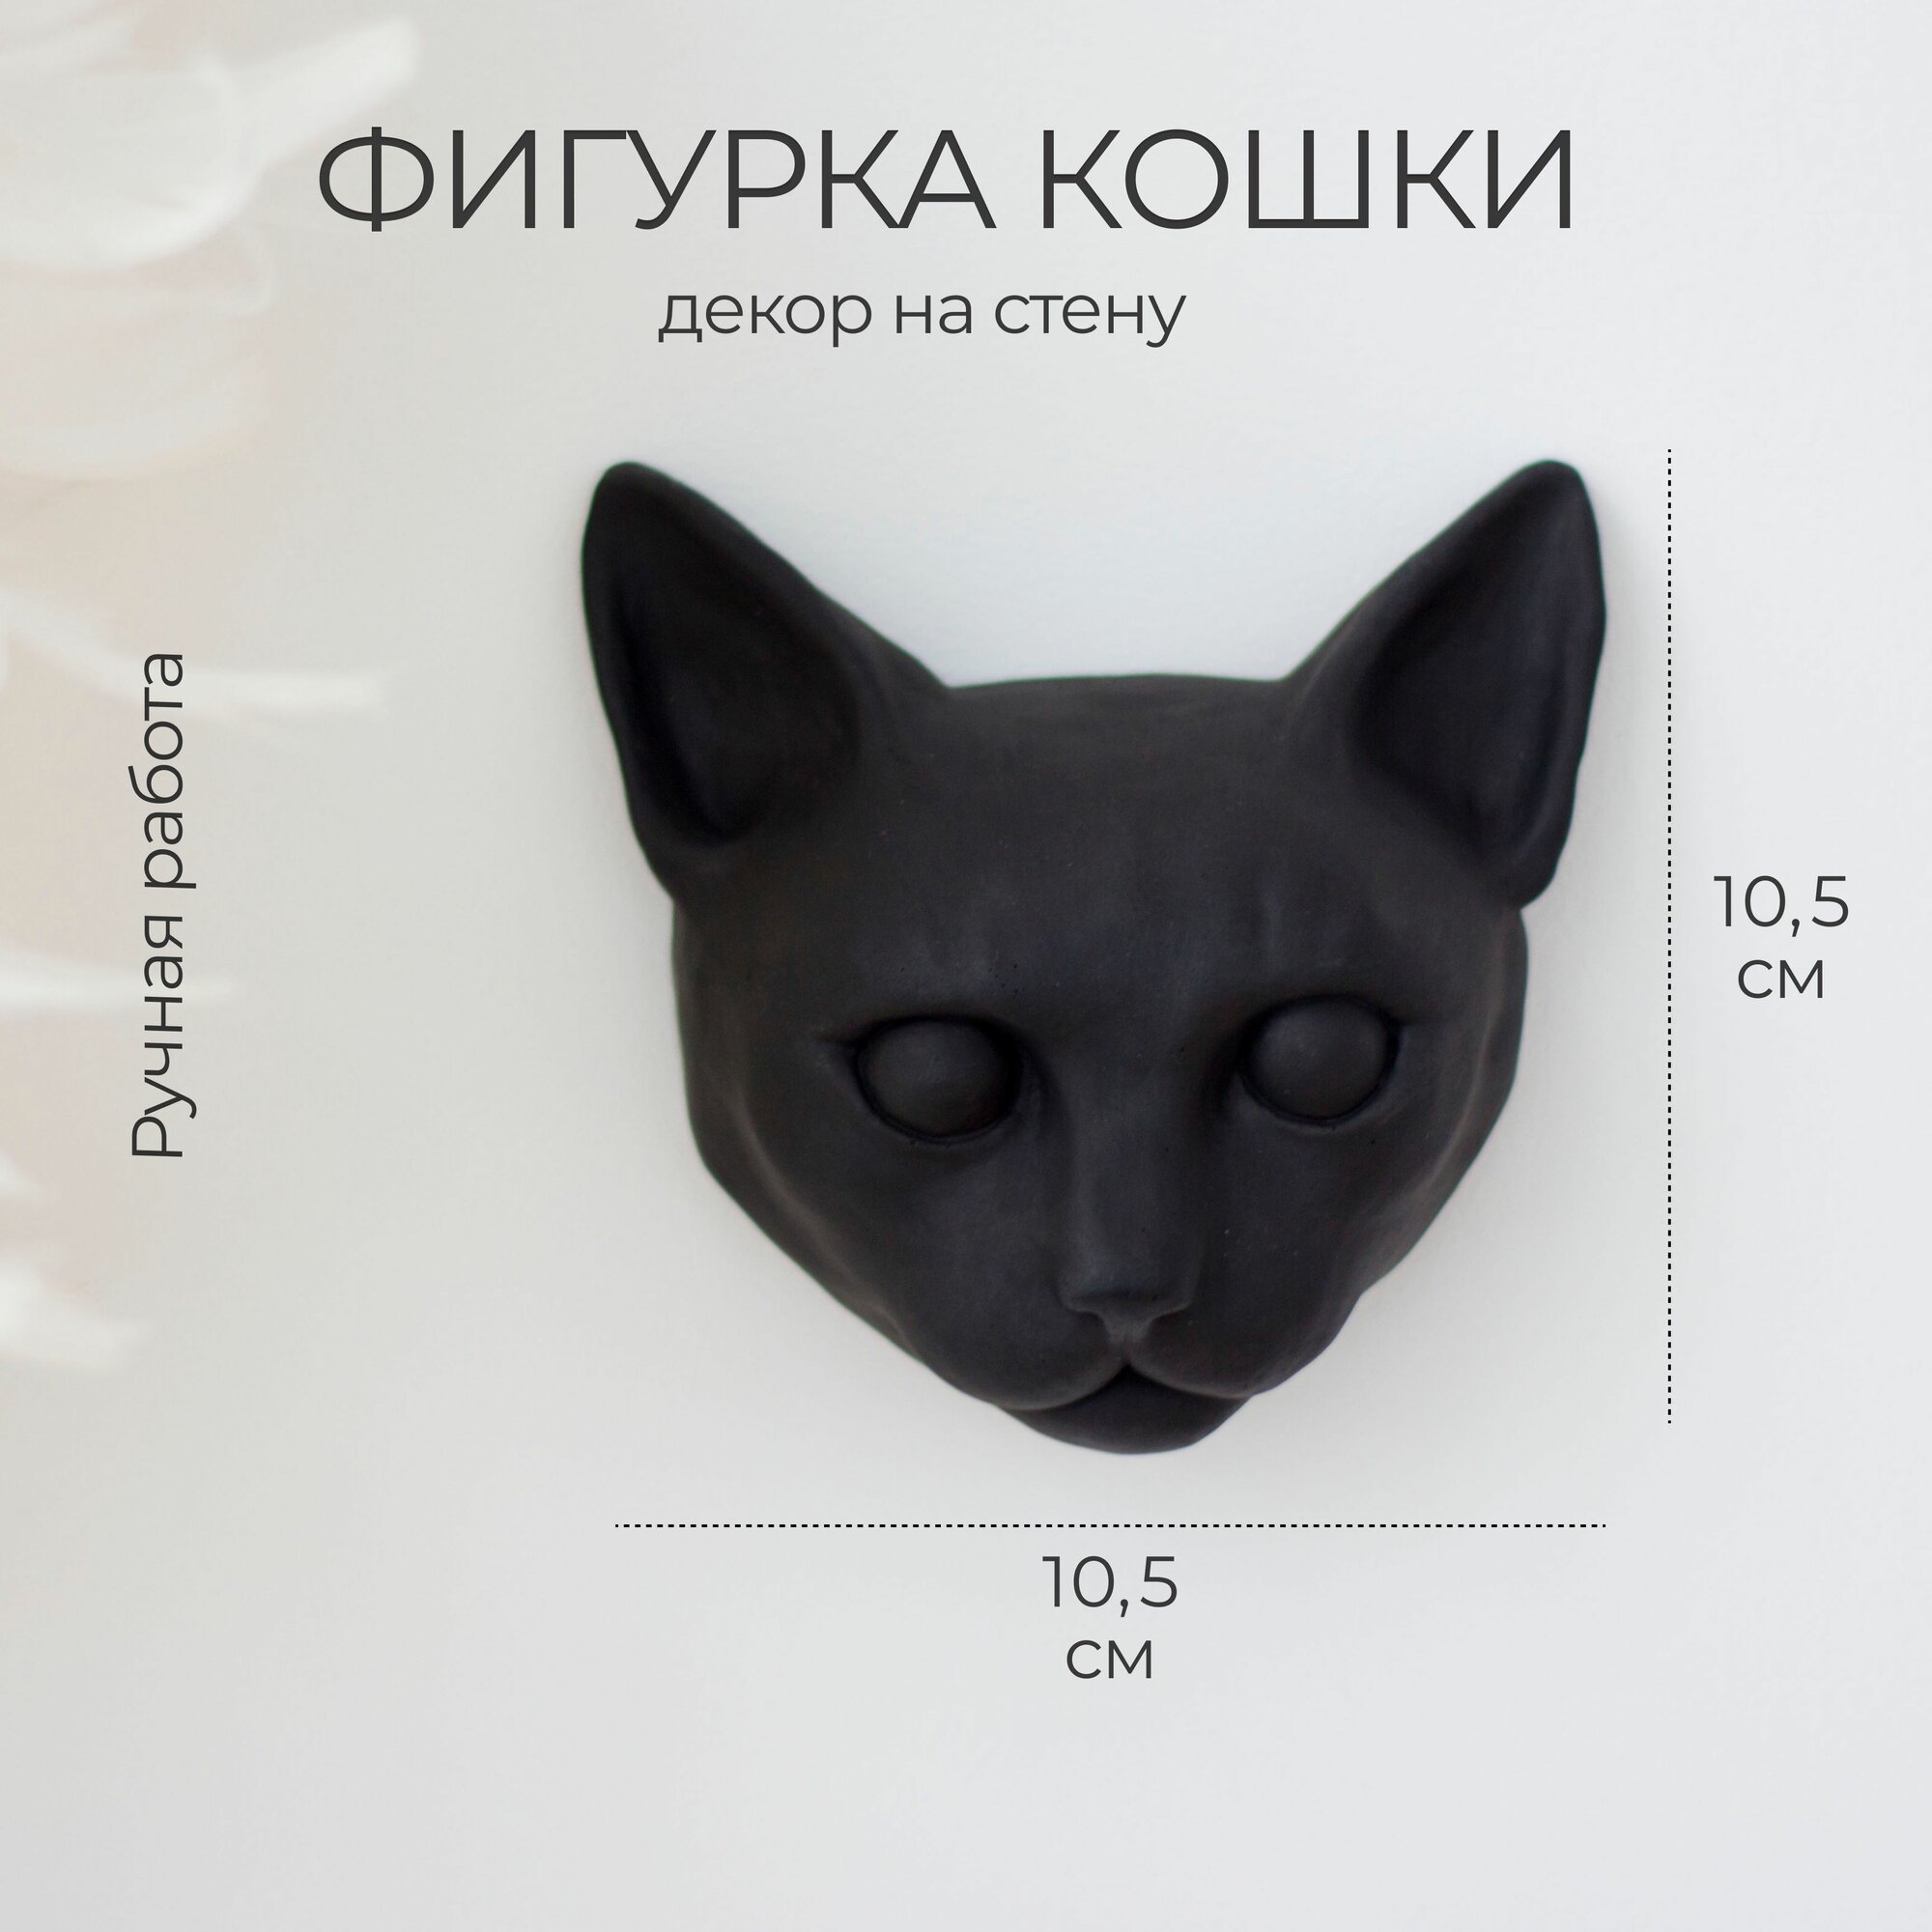 Фигурка кошки на стену, черная